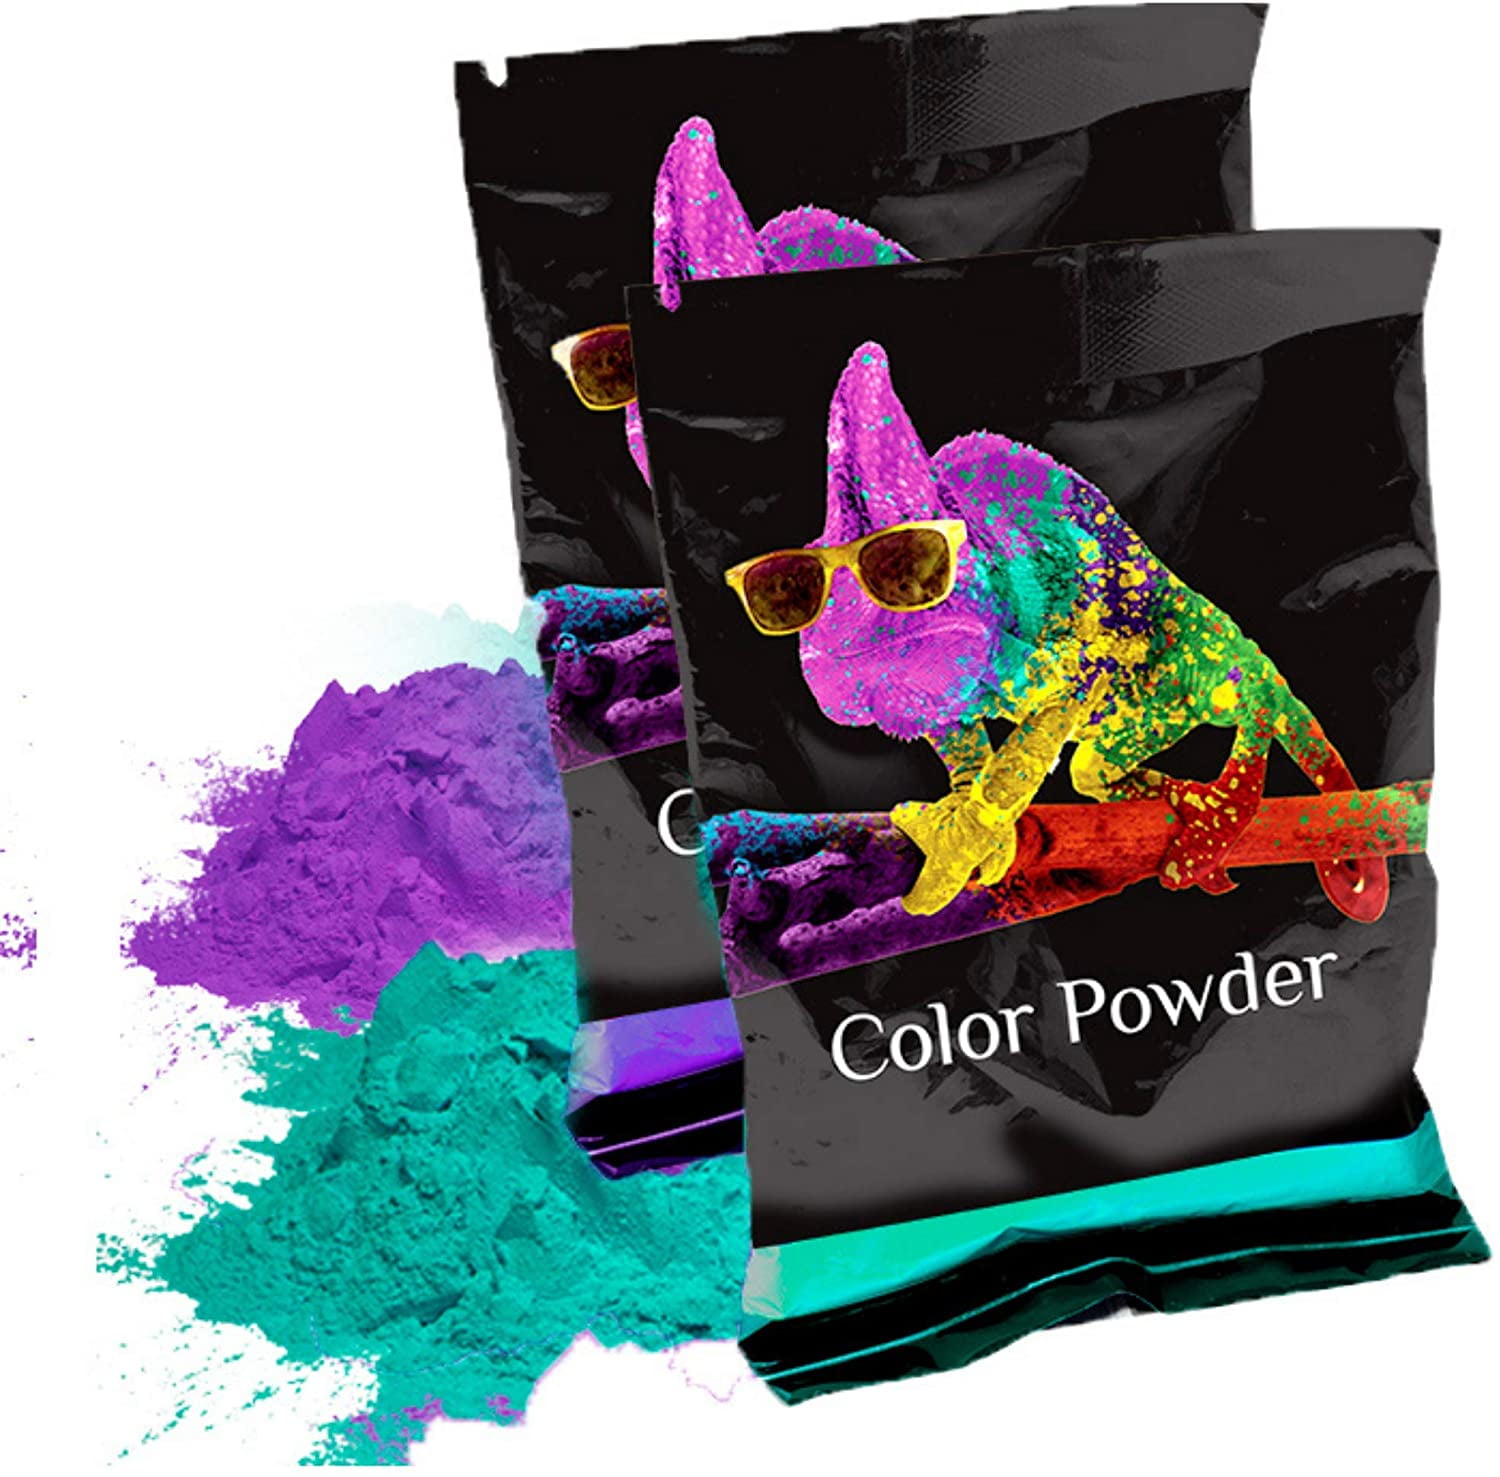 Chameleon Colors Gender Reveal Powder Set and Pink Color Chalk Powder for  Photography, Baby Boy or Girl Gender Reveal, Car Tire Burnout, Birthd -  ShopStyle Arts & Crafts Toys